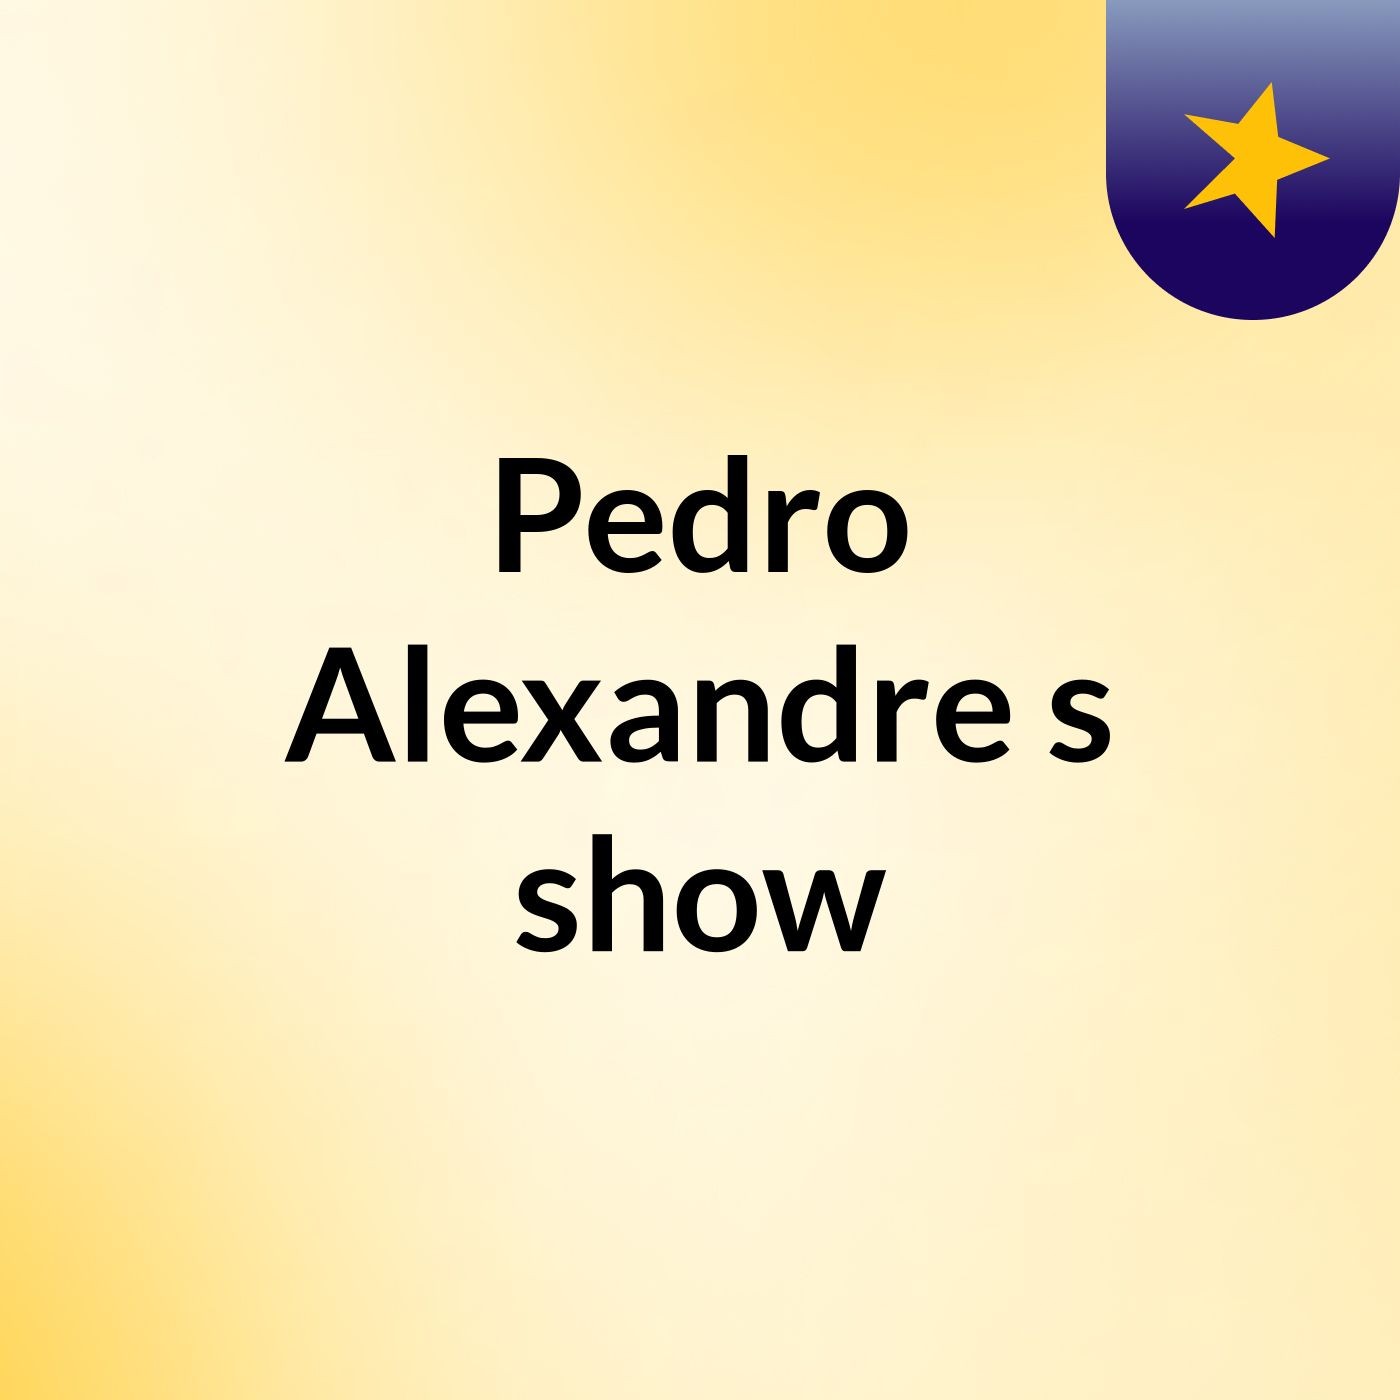 Pedro Alexandre's show